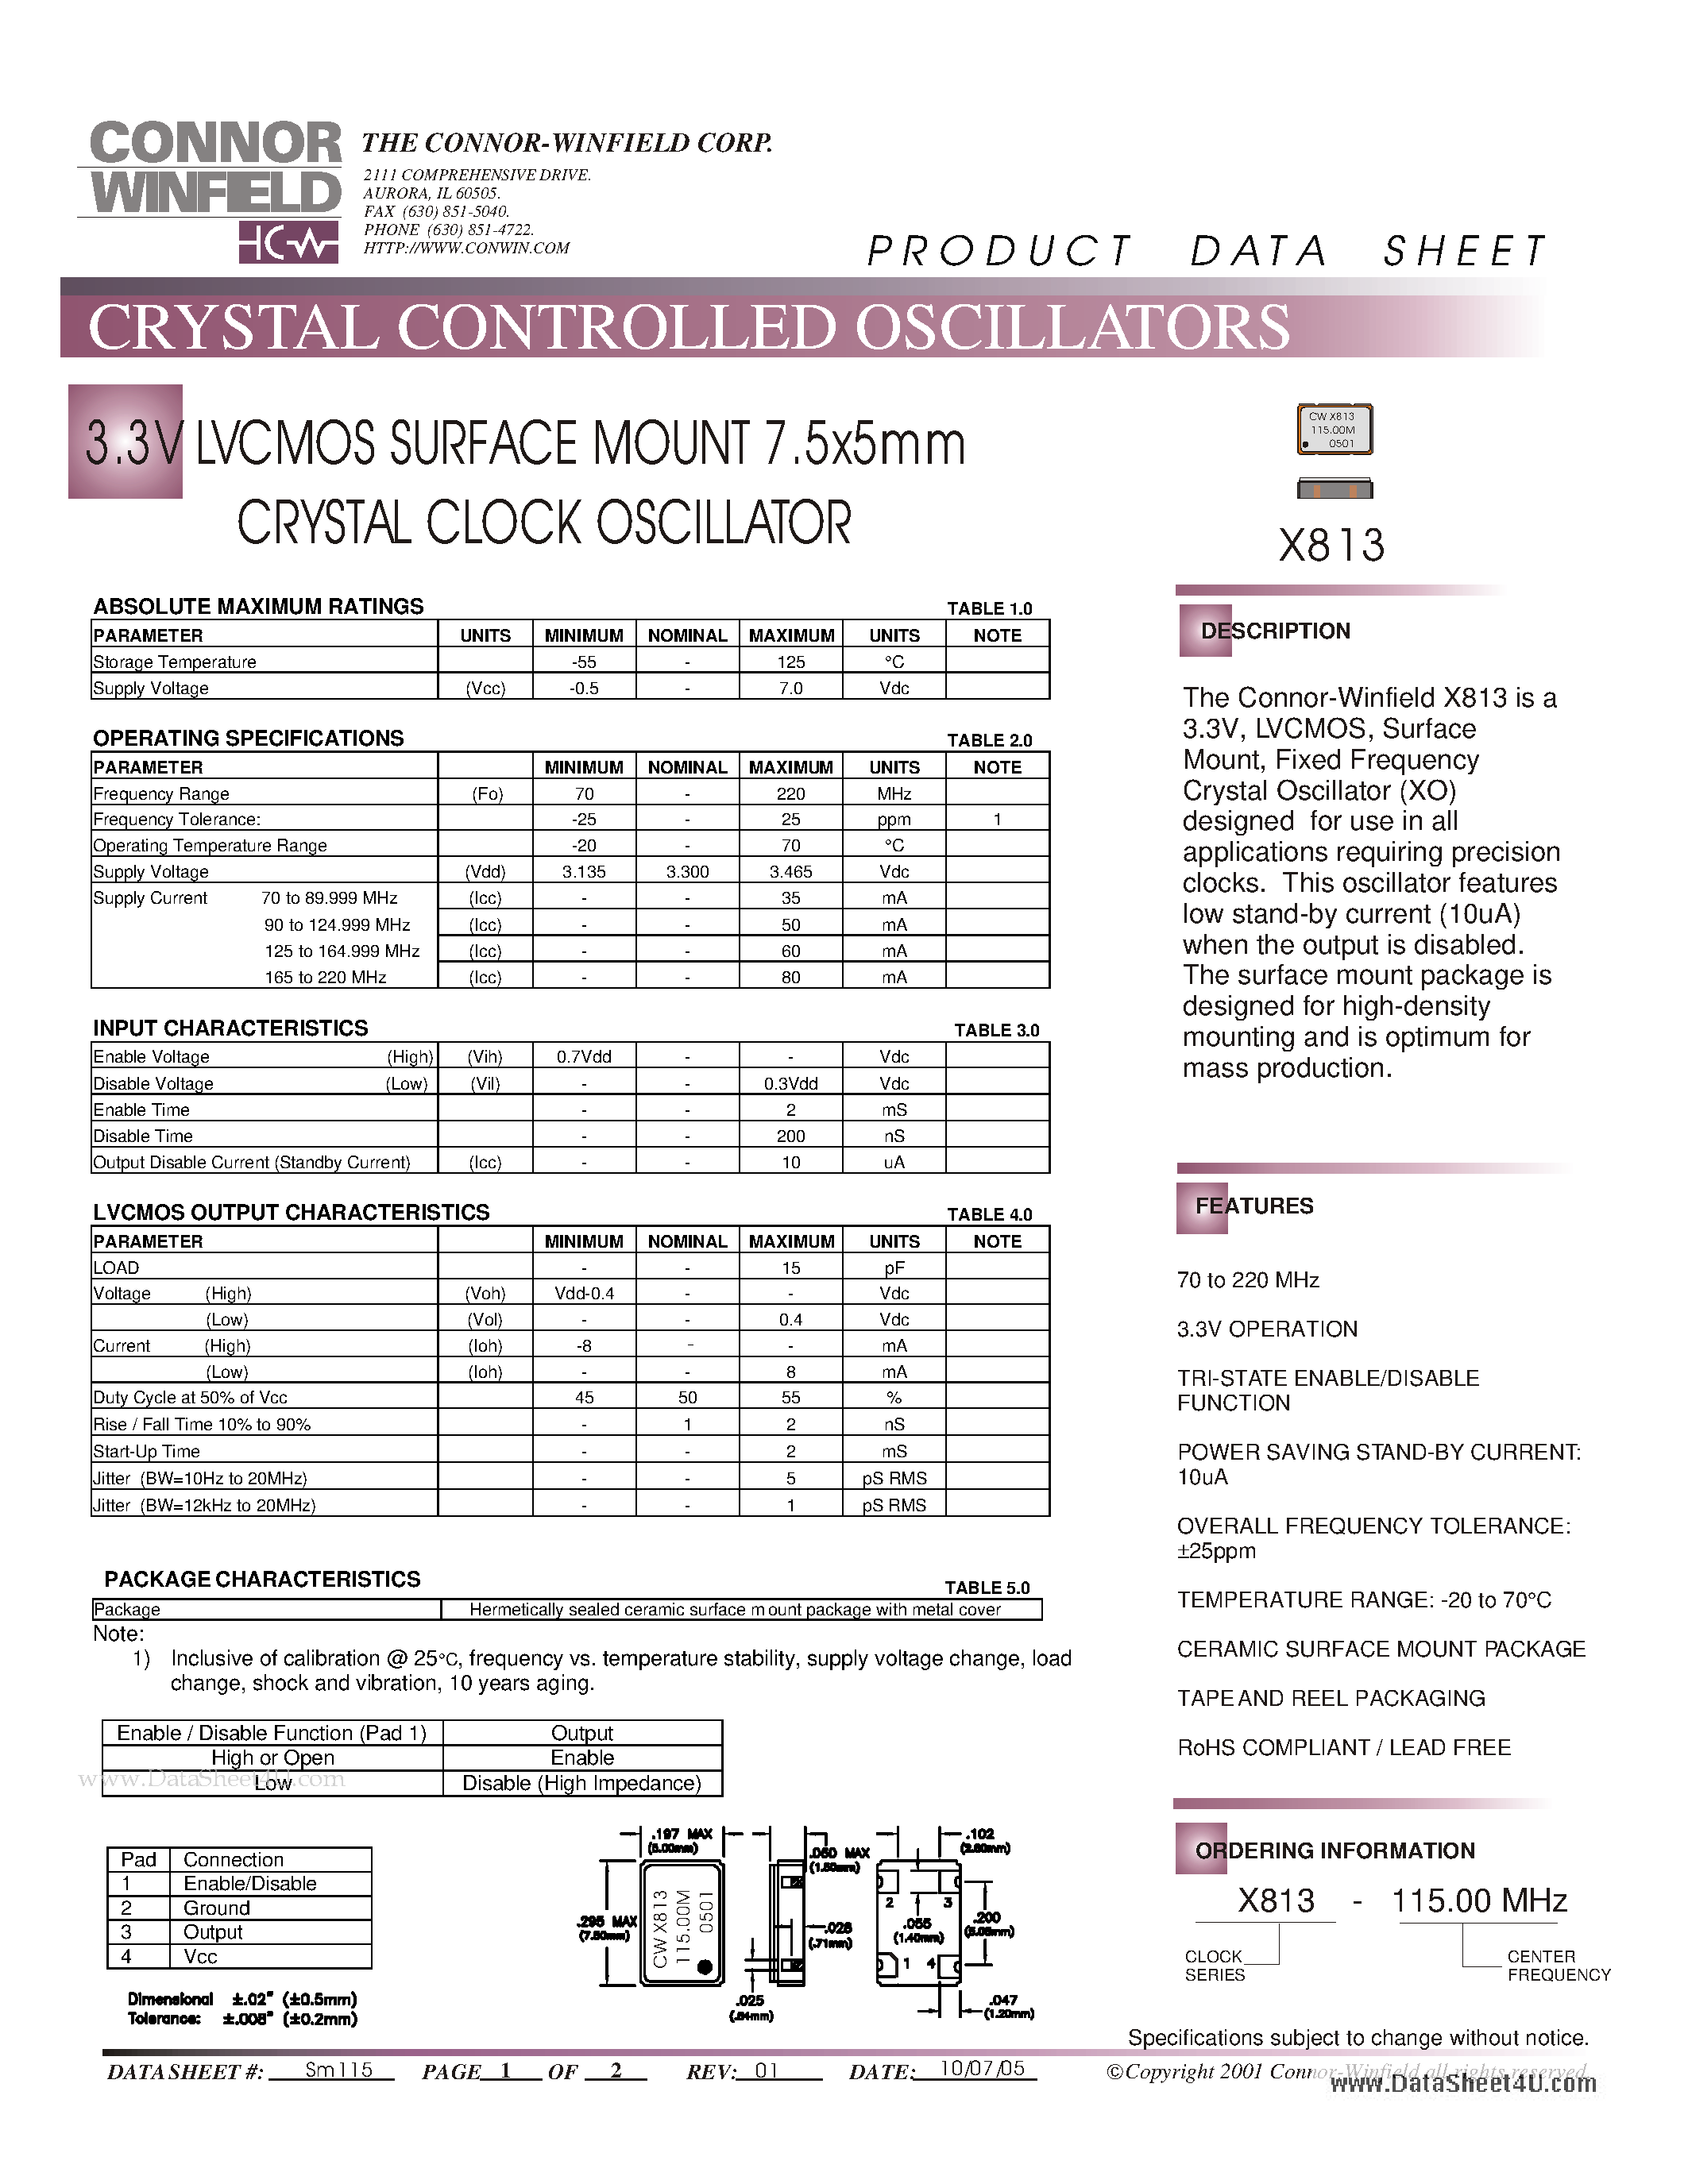 Datasheet X813 - 3.3V LVCMOS SURFACE MOUNT 7.5x5mm CRYSTAL CLOCK OSCILLATOR page 1